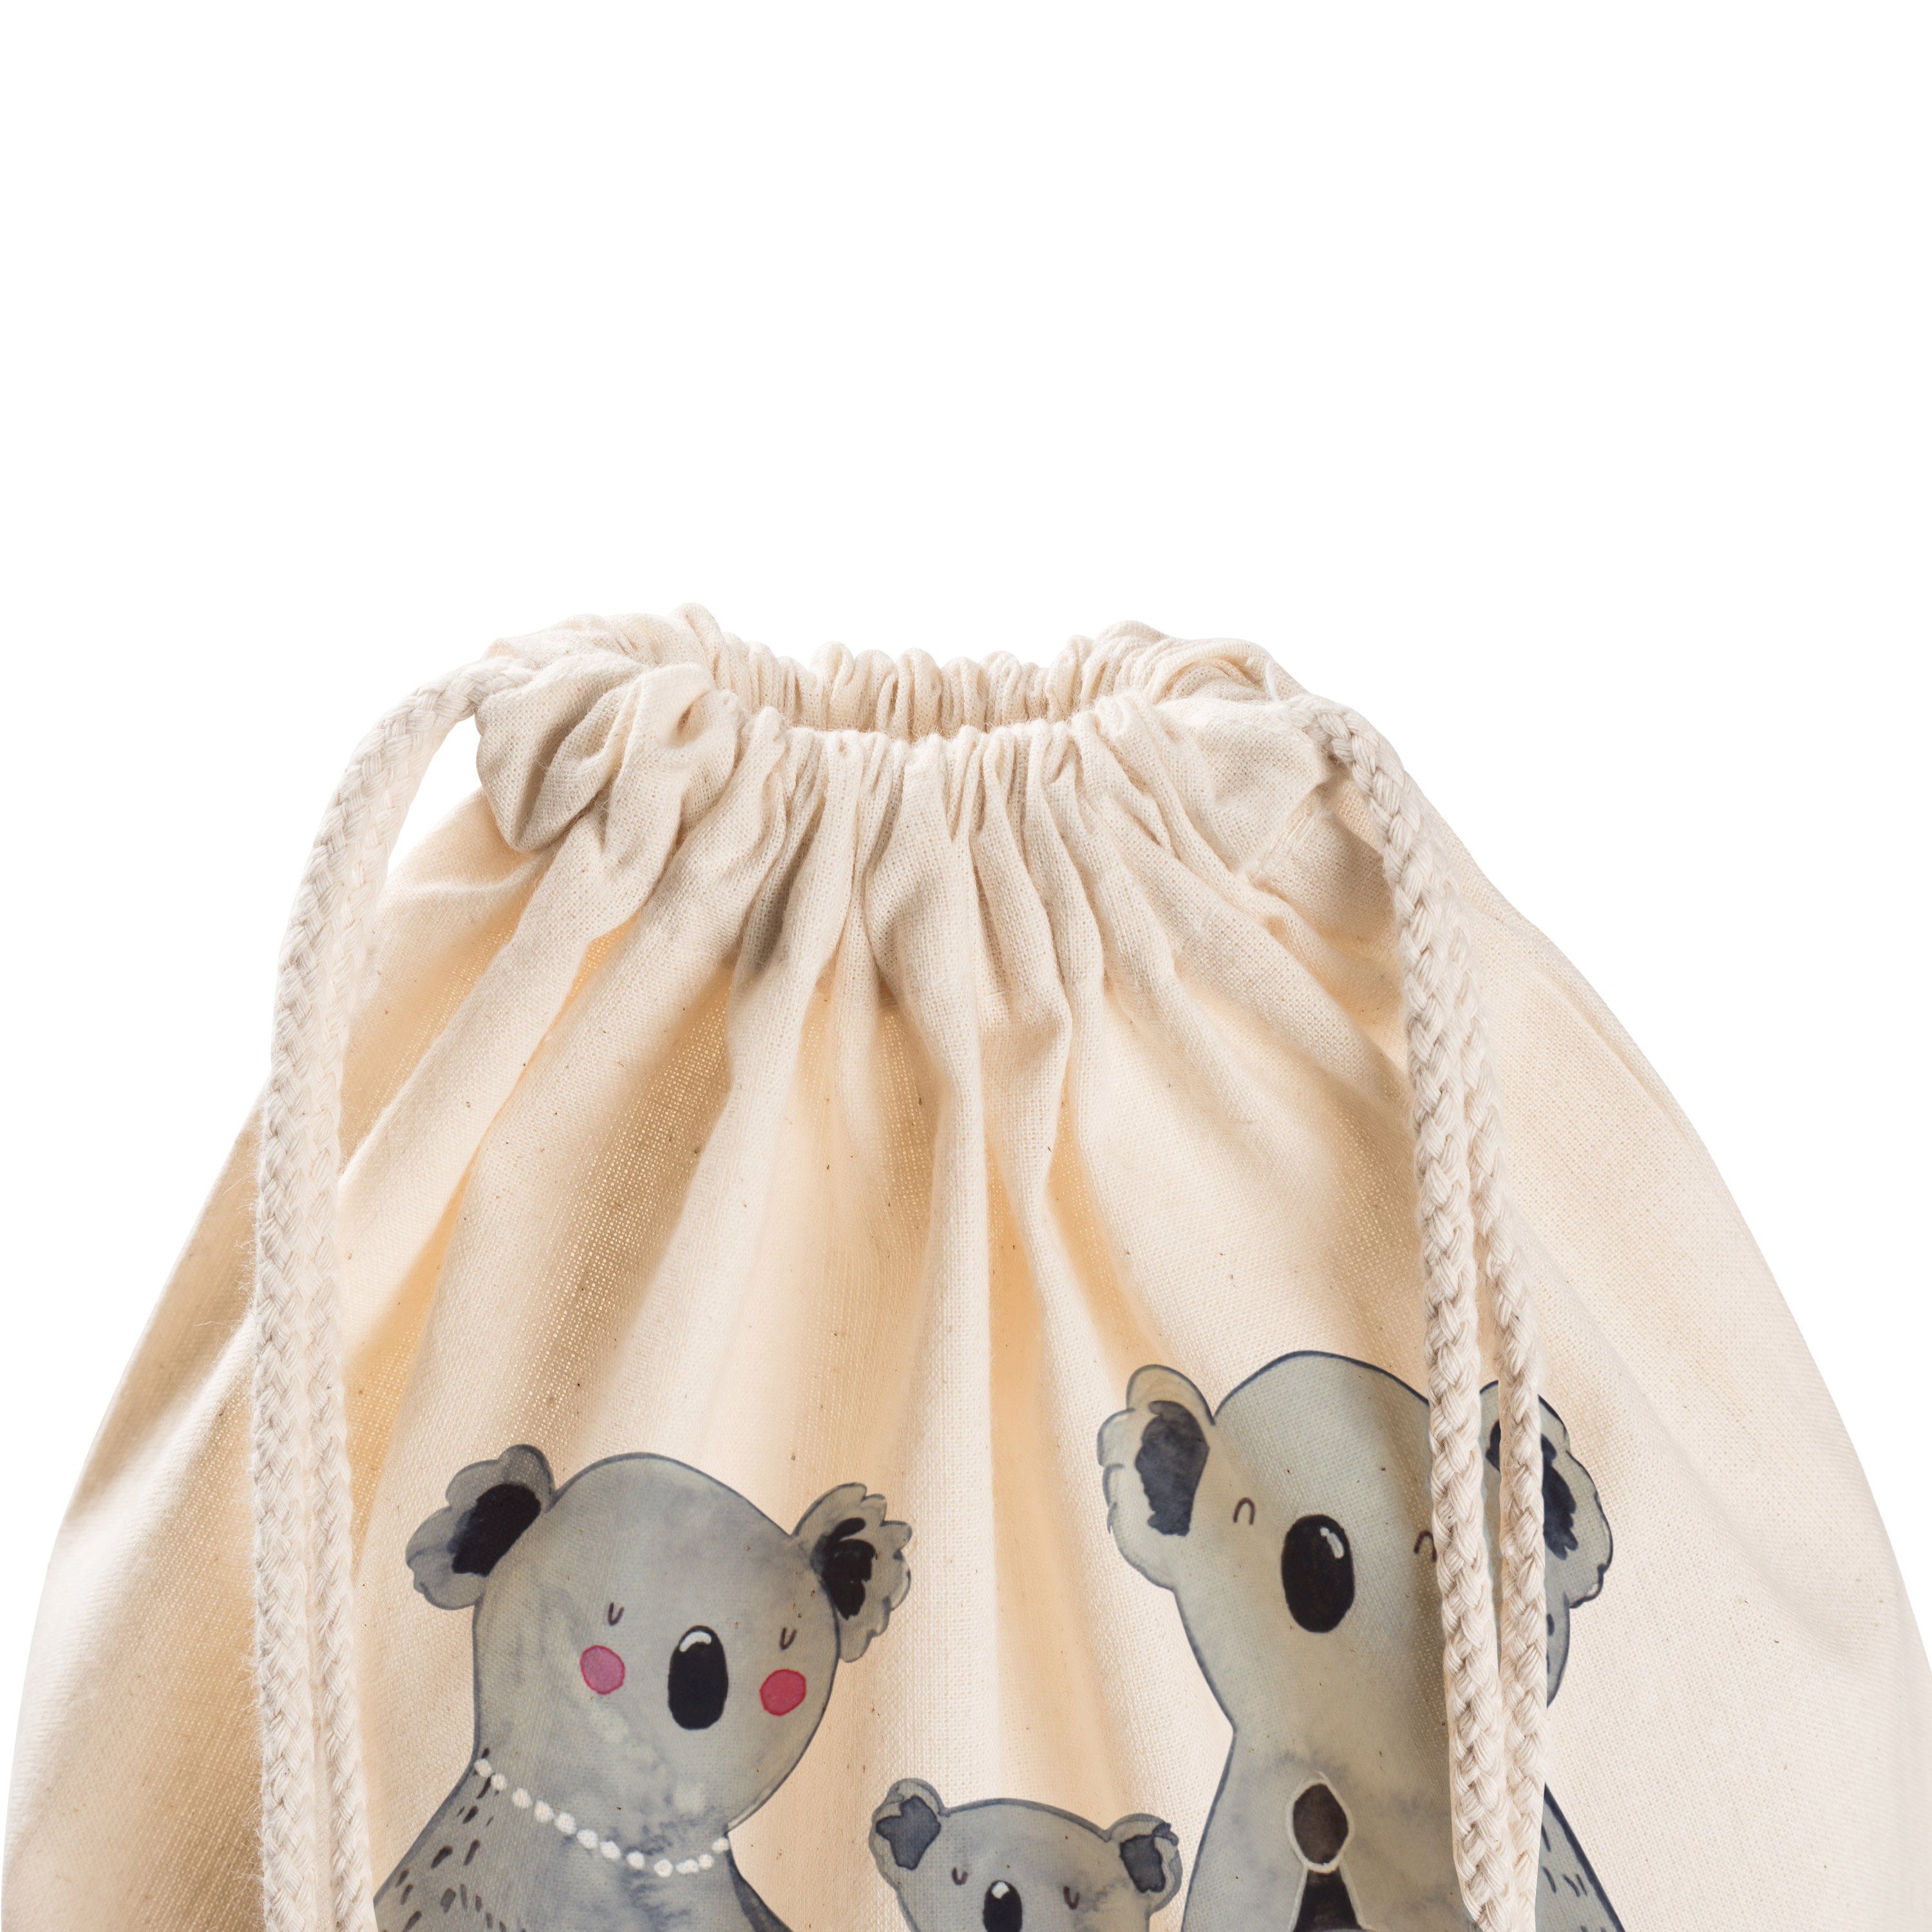 Mr. & Mrs. Panda Sporttasche - Transparent (1-tlg) - Familie Schweste Koala Kinder, Oma, Beutel, Geschenk